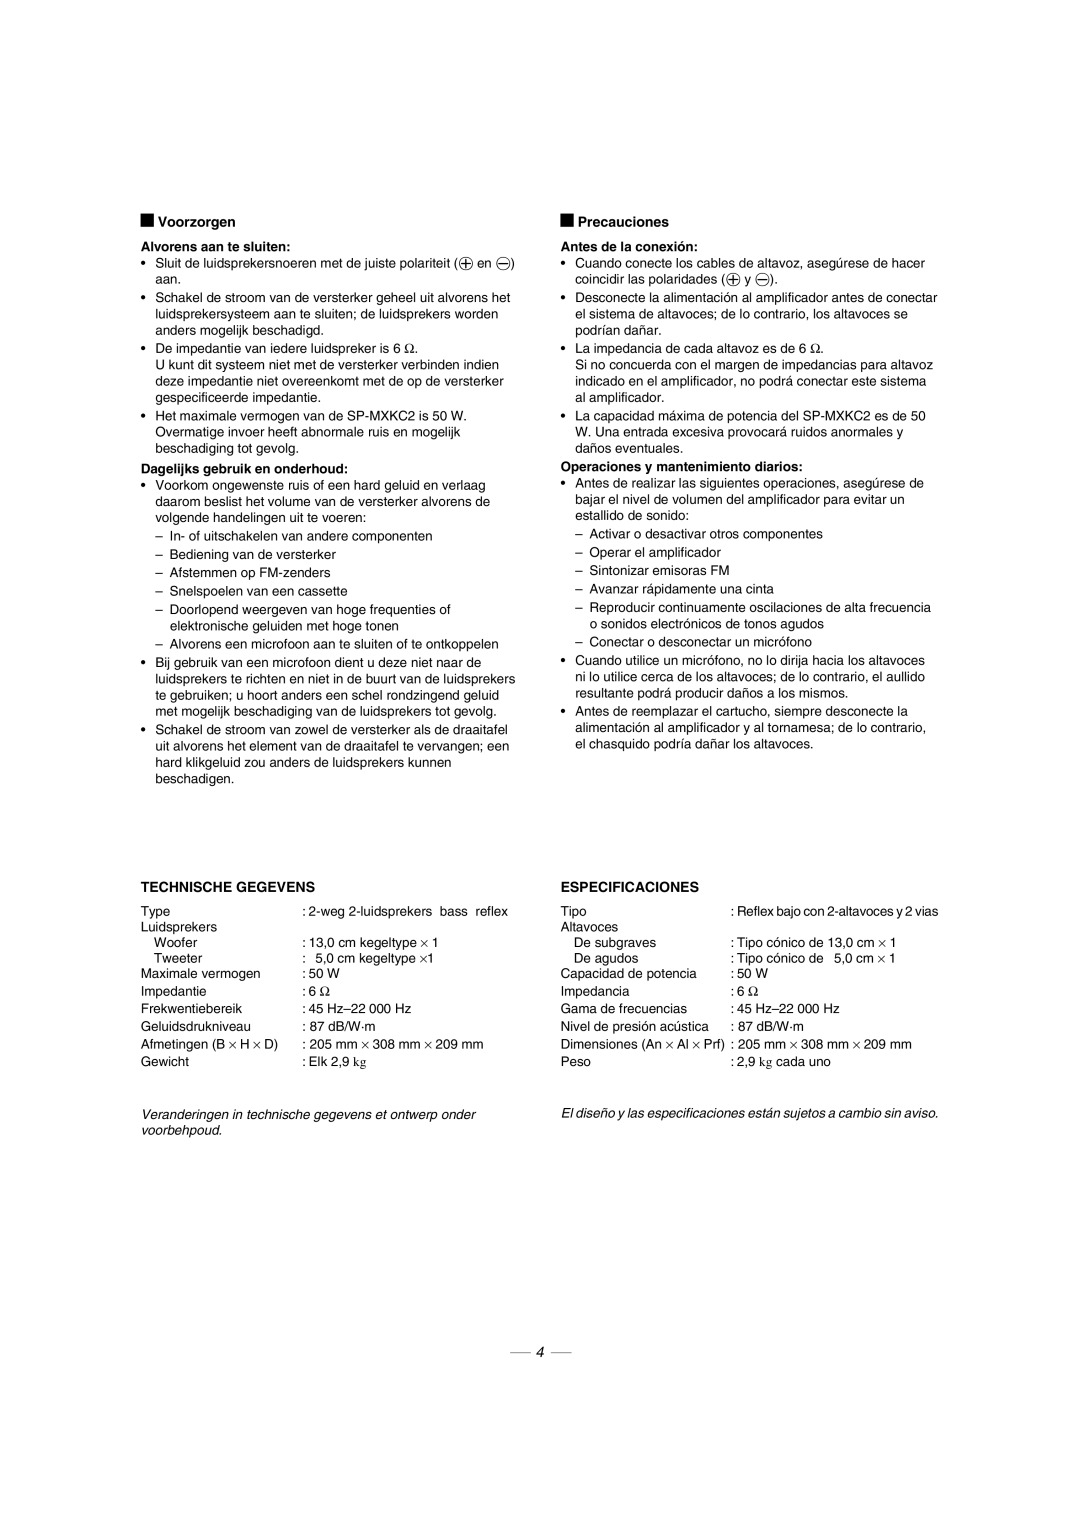 JVC LVT1346-002A manual Voorzorgen, Precauciones, Technische Gegevens Especificaciones 